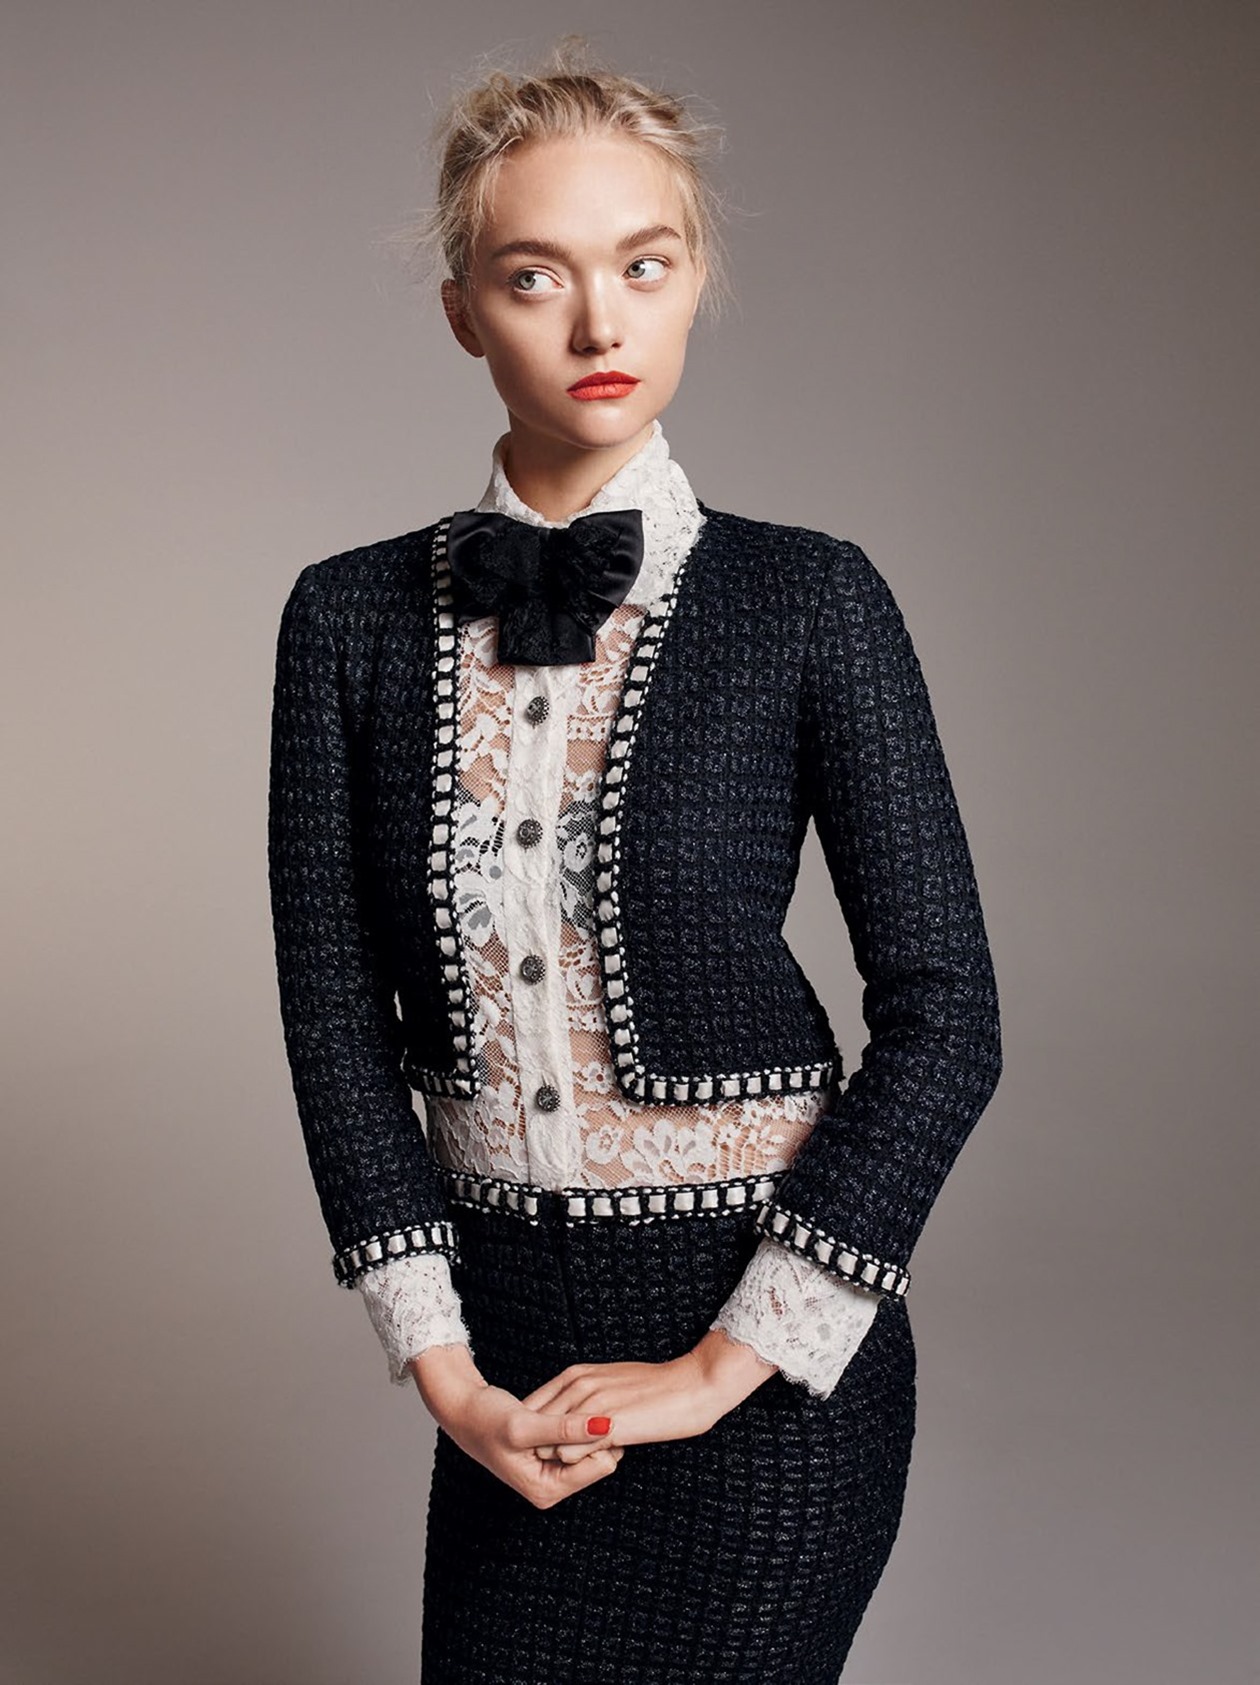 Pin by RITA on La moda ( style)  Tweed jacket outfit, Chanel tweed jacket,  Chanel jacket outfit